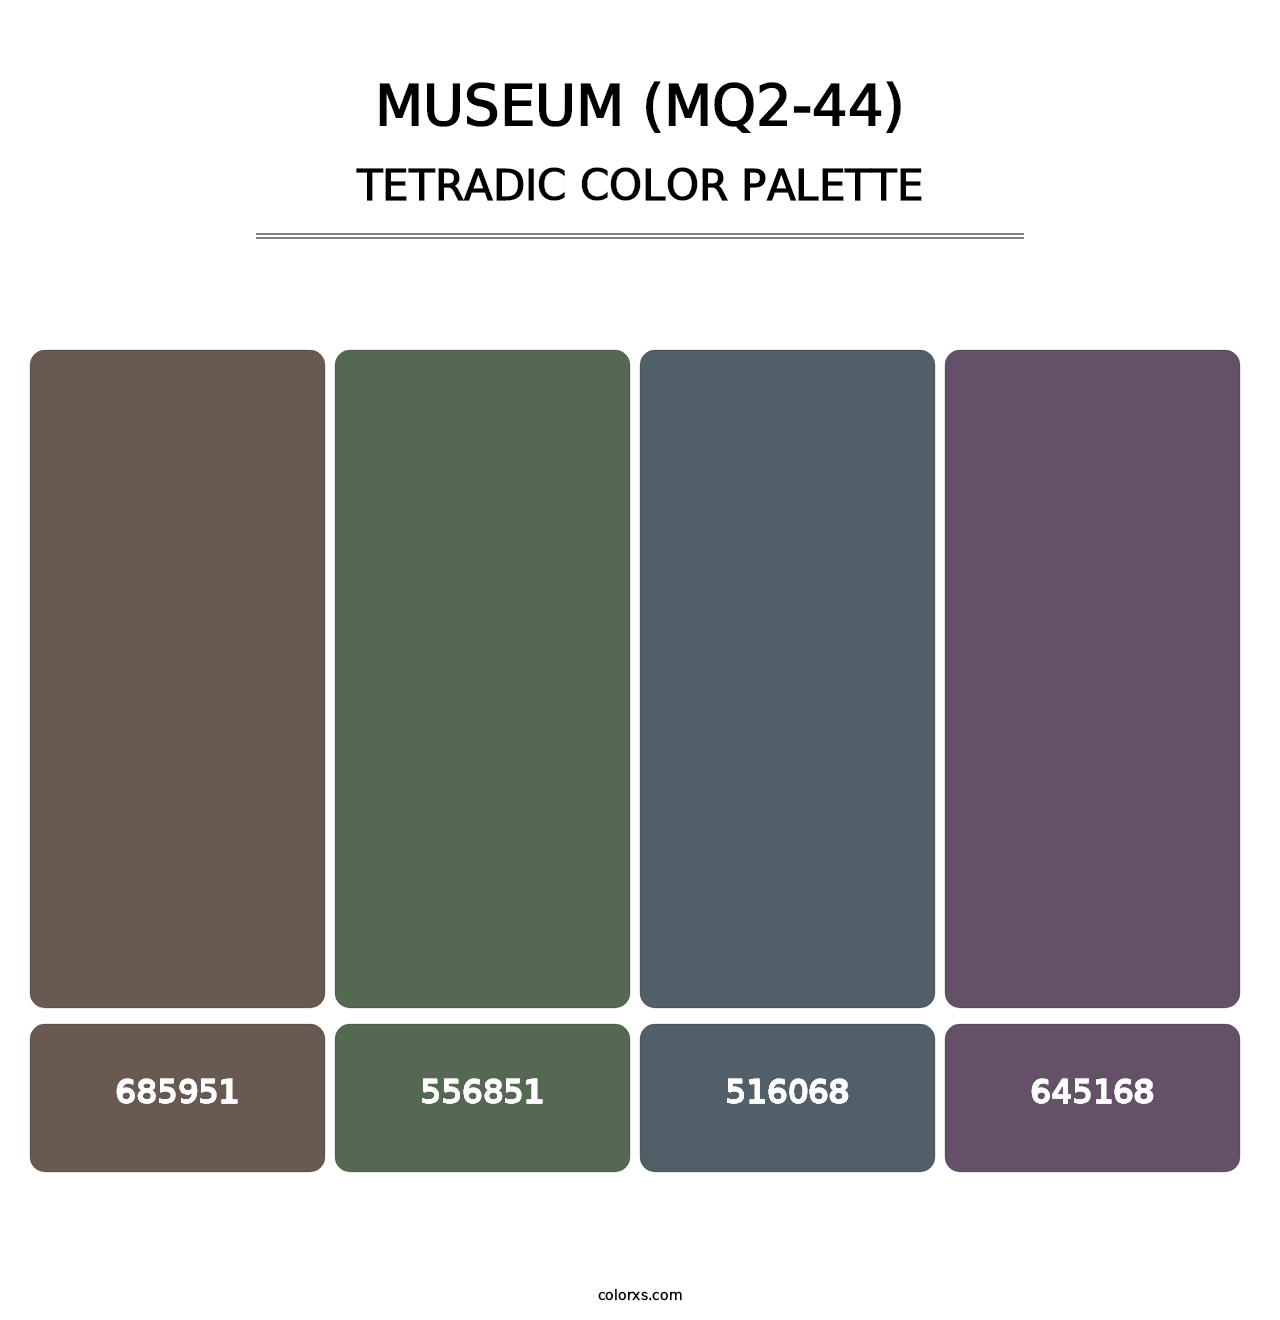 Museum (MQ2-44) - Tetradic Color Palette